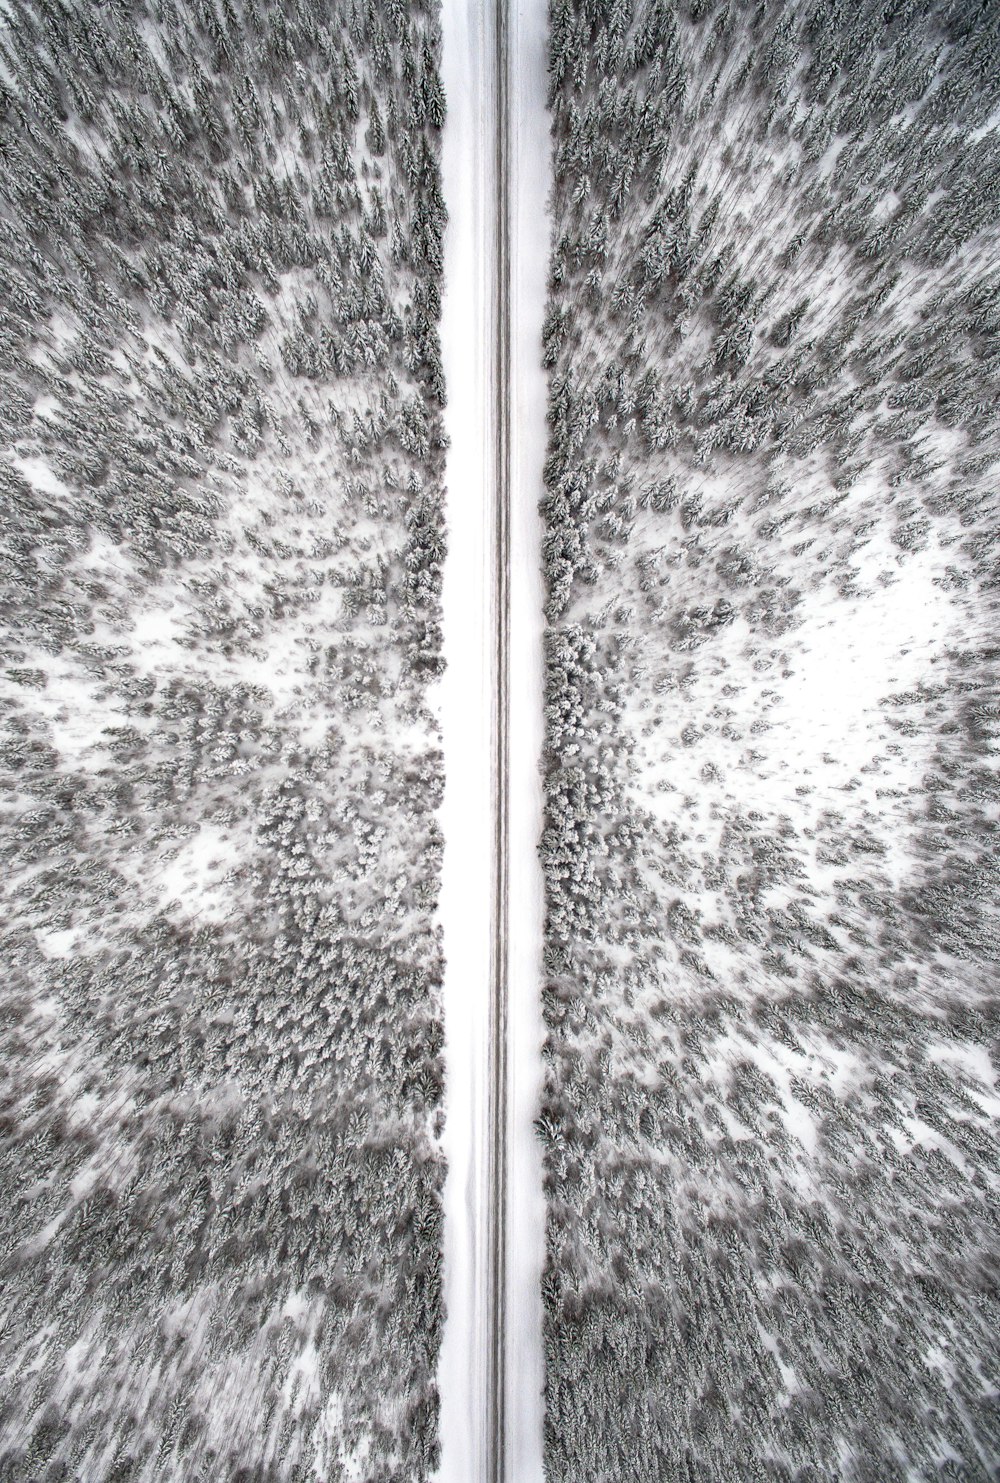 fotografia aérea de terra coberta de neve